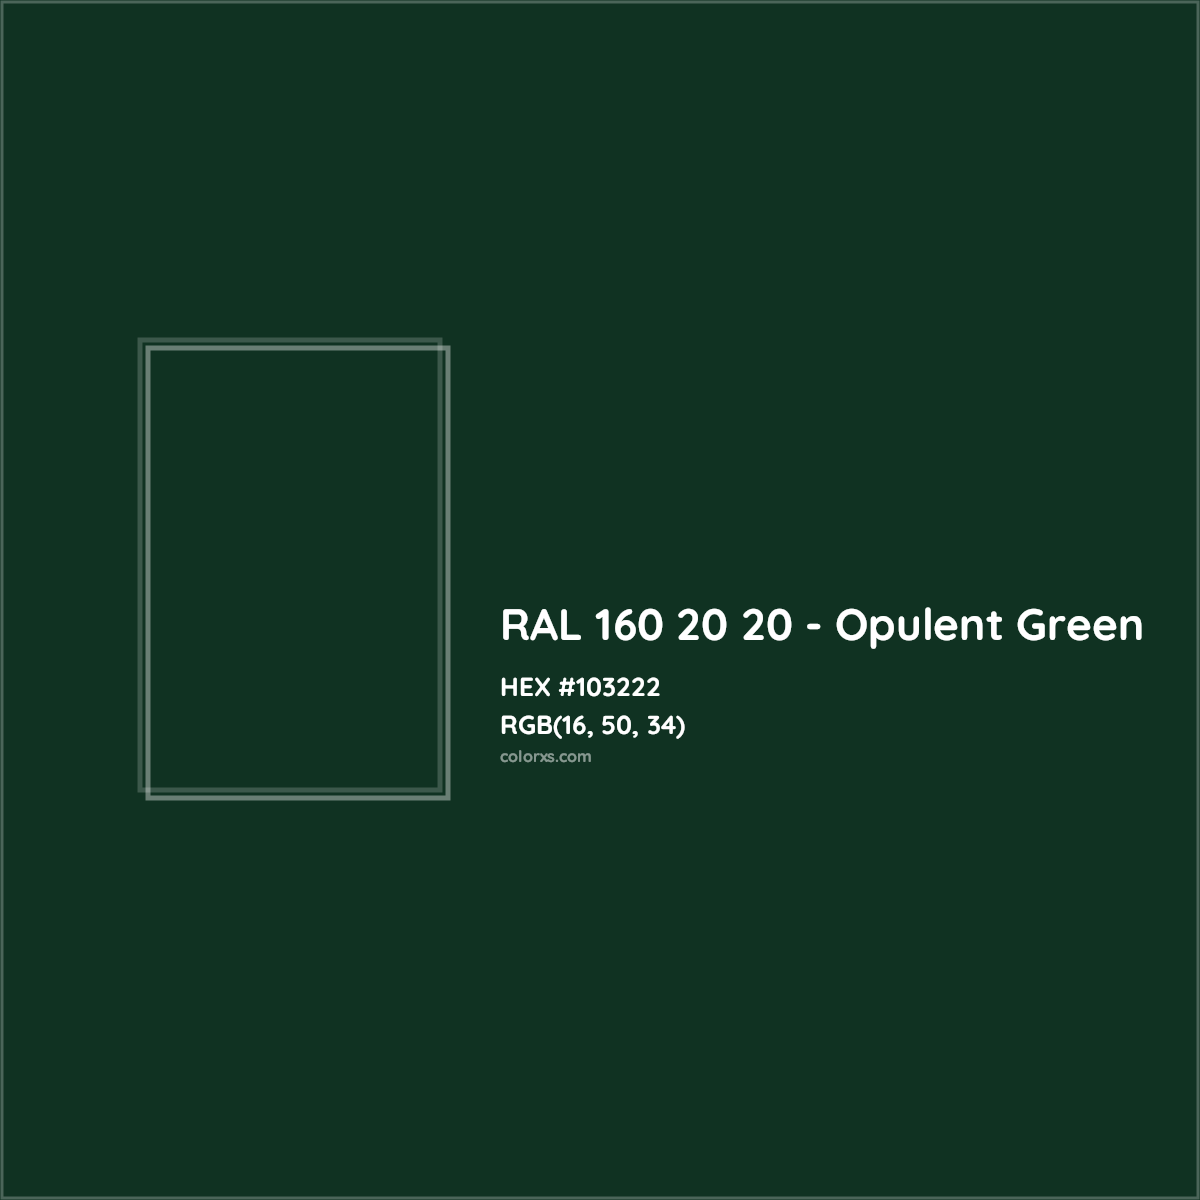 HEX #103222 RAL 160 20 20 - Opulent Green CMS RAL Design - Color Code